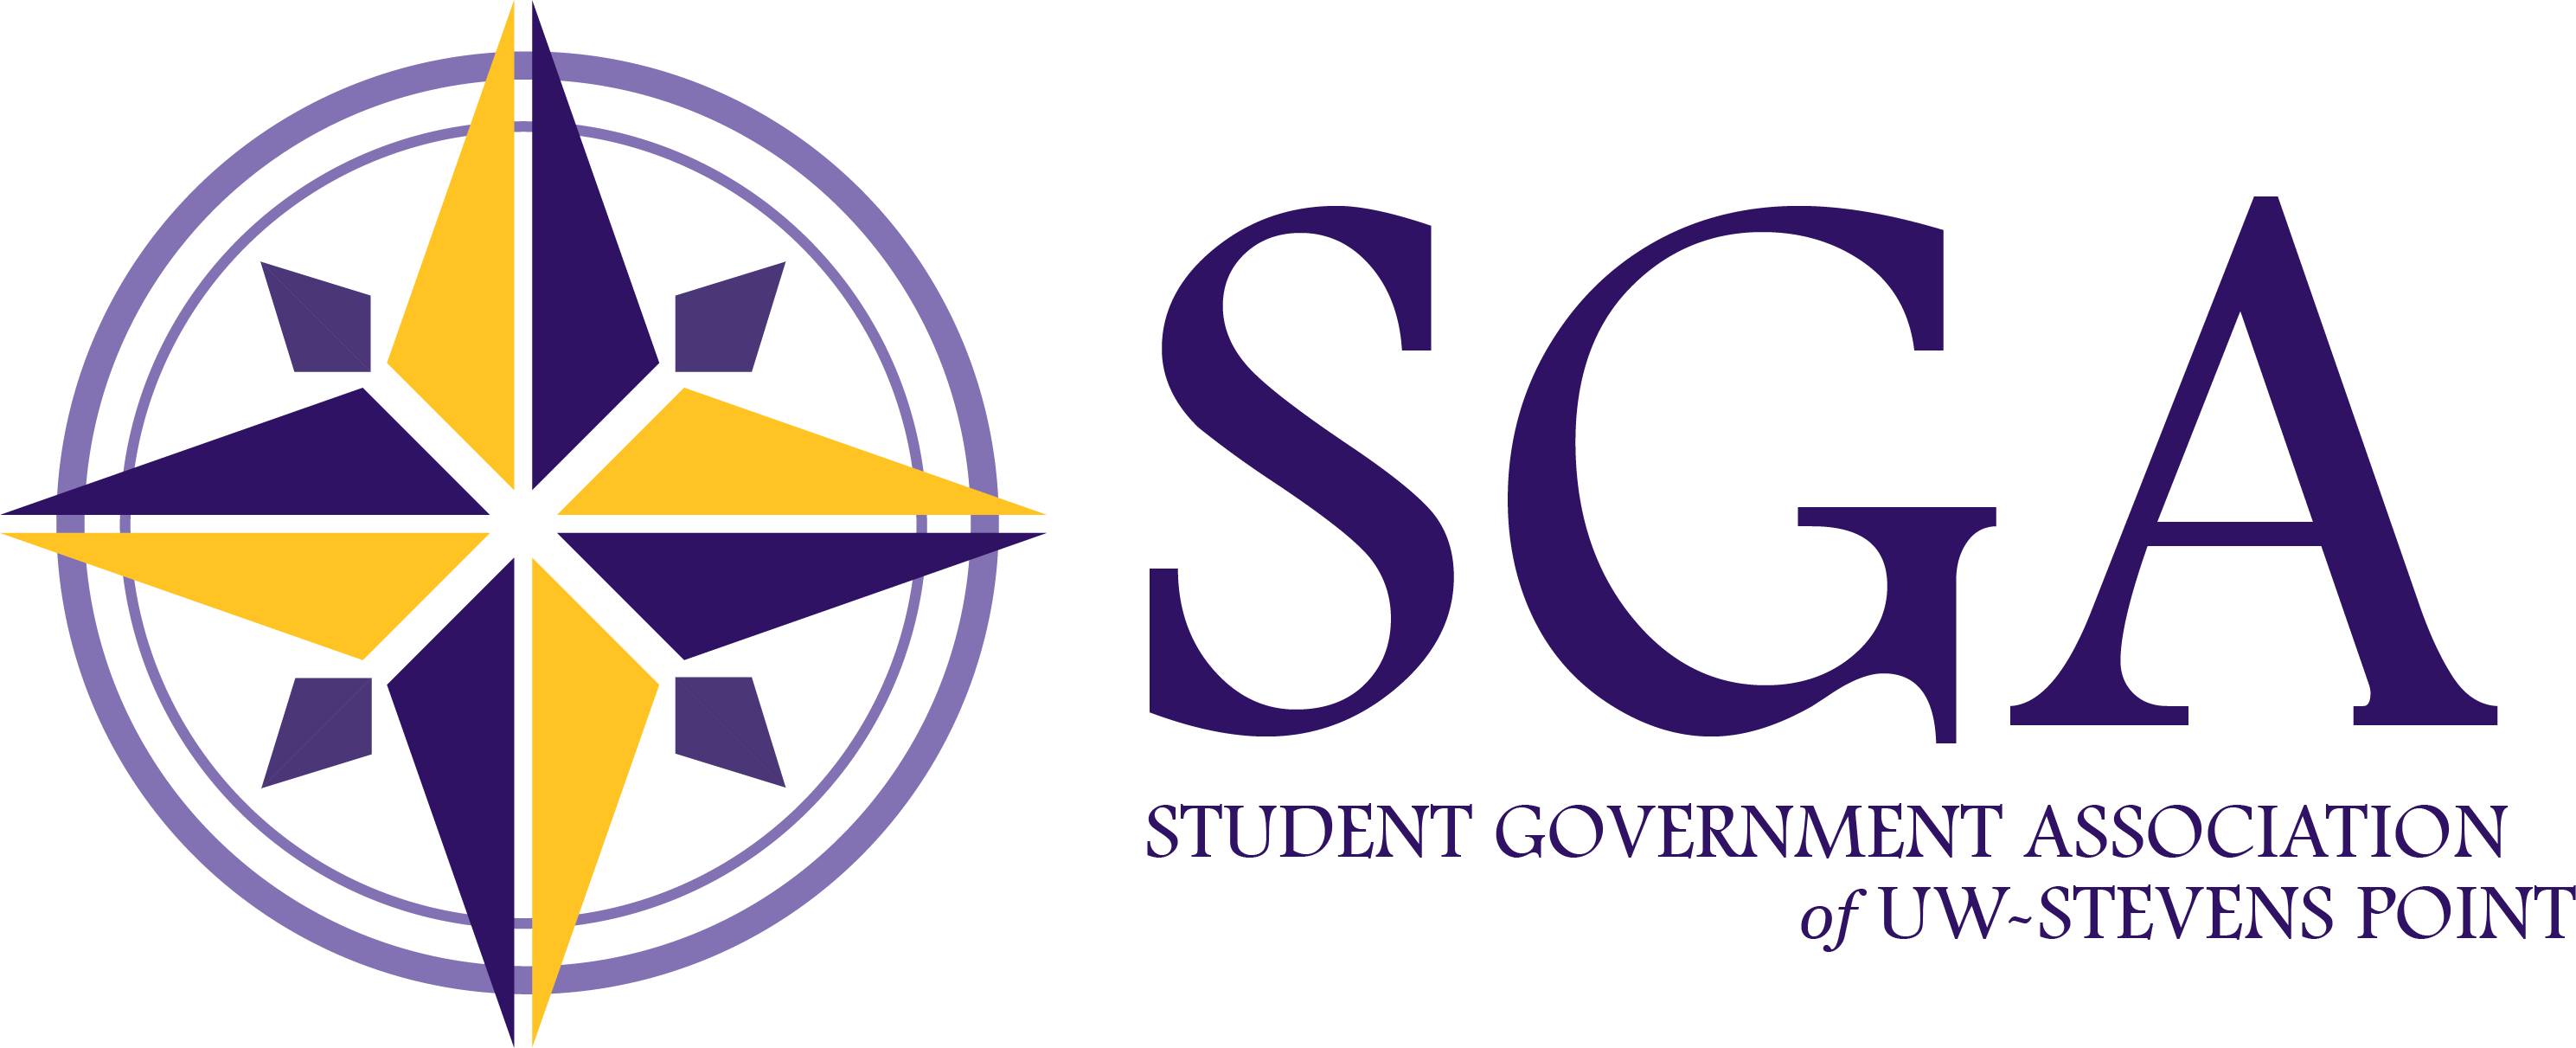 Https nets ga. SGA. Student government Association at Webster.